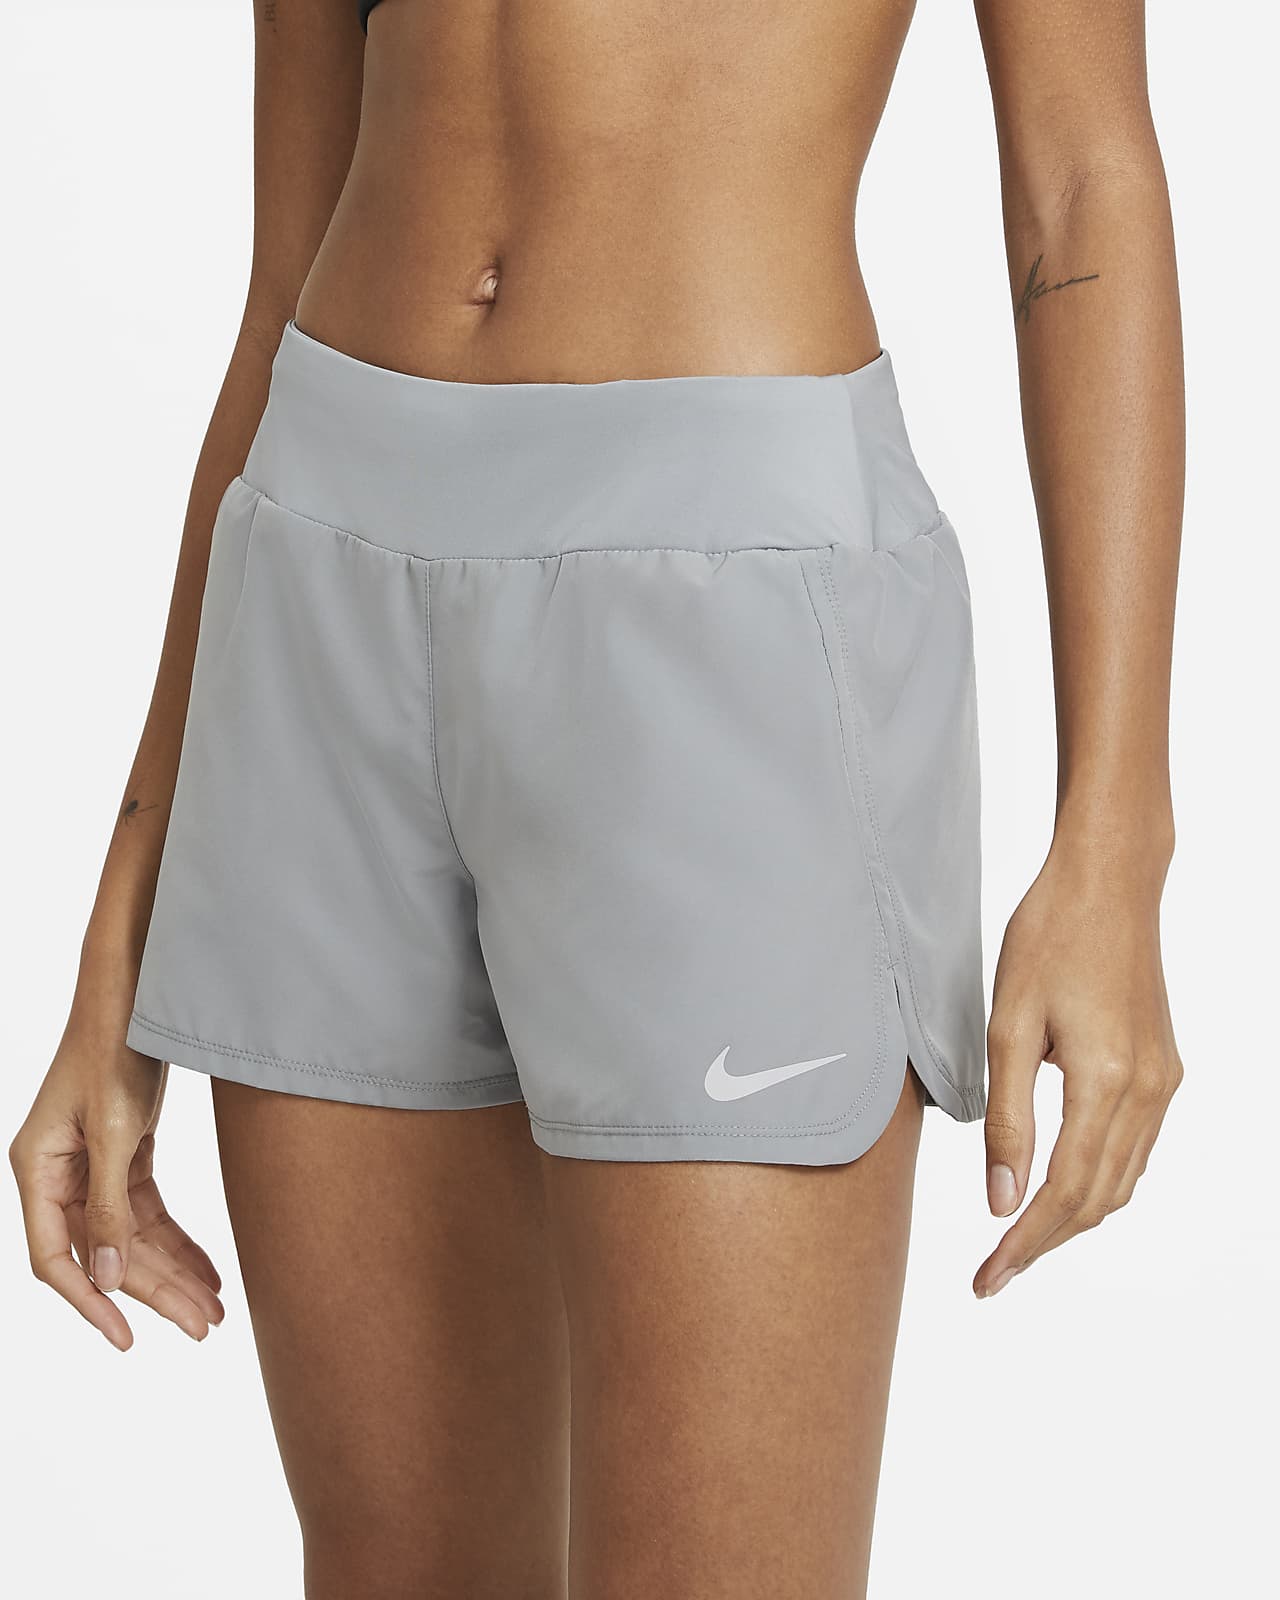 Manifest fiction Suppress Nike Women's Running Shorts. Nike.com